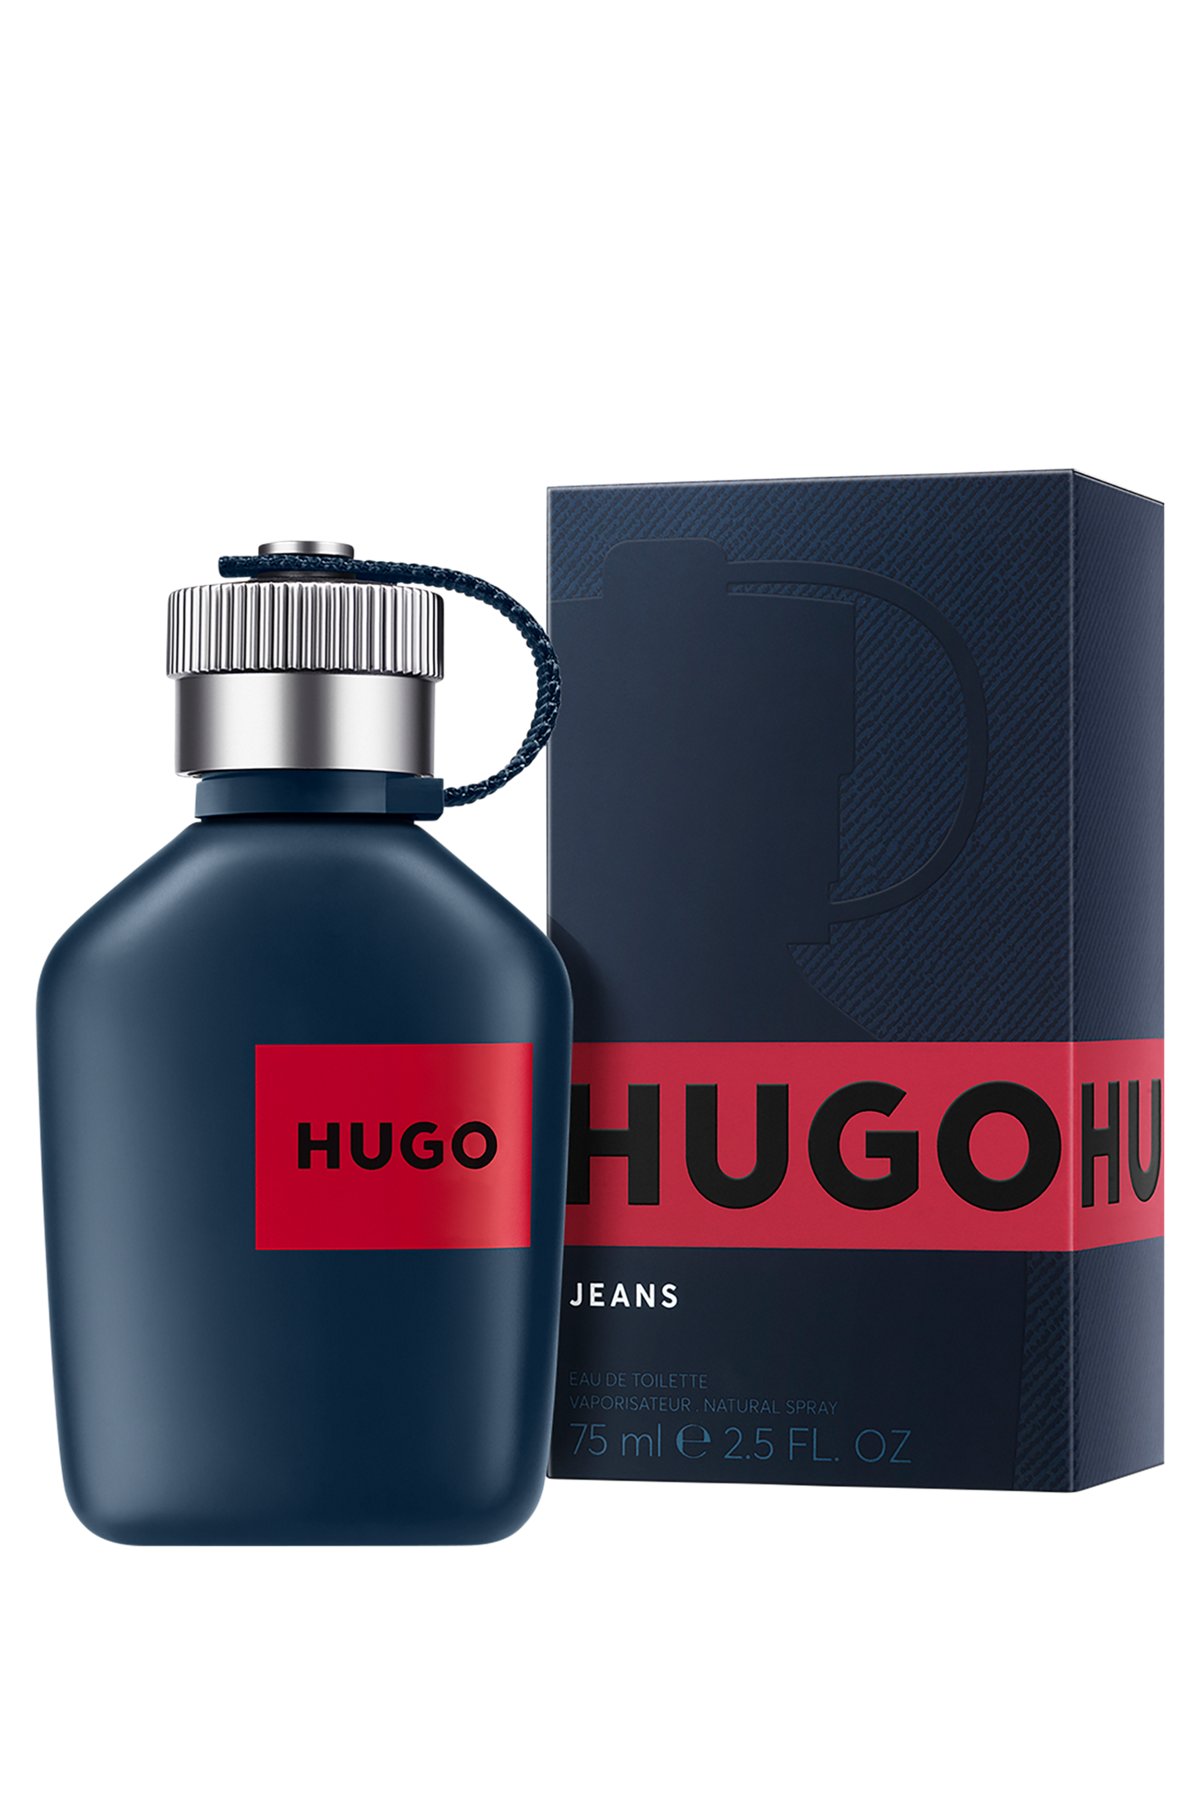 HUGO - HUGO Jeans eau de toilette 75ml